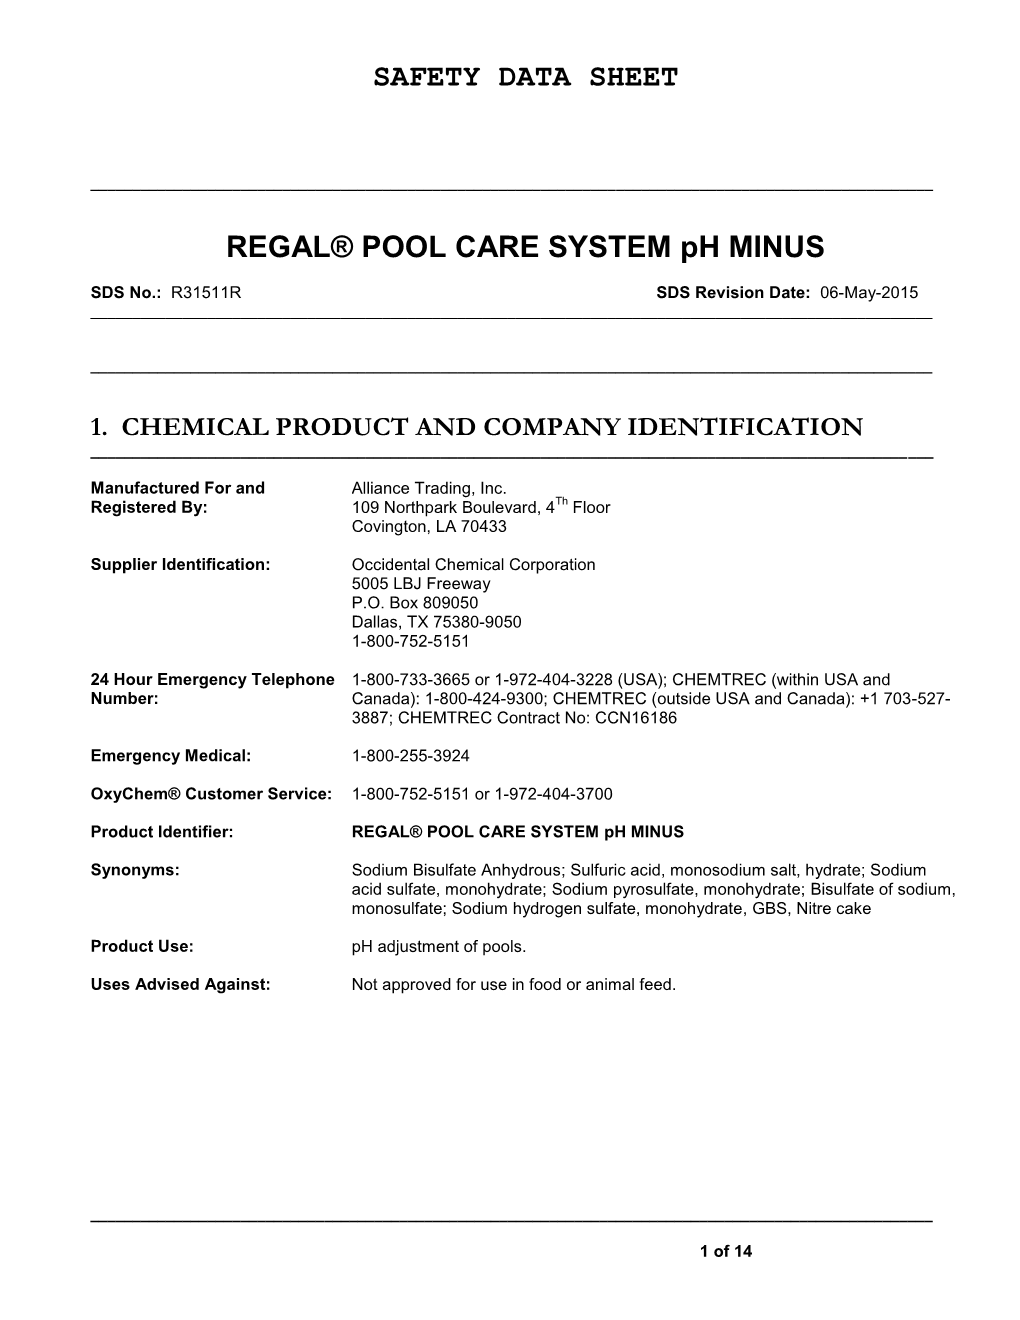 SAFETY DATA SHEET REGAL® POOL CARE SYSTEM Ph MINUS